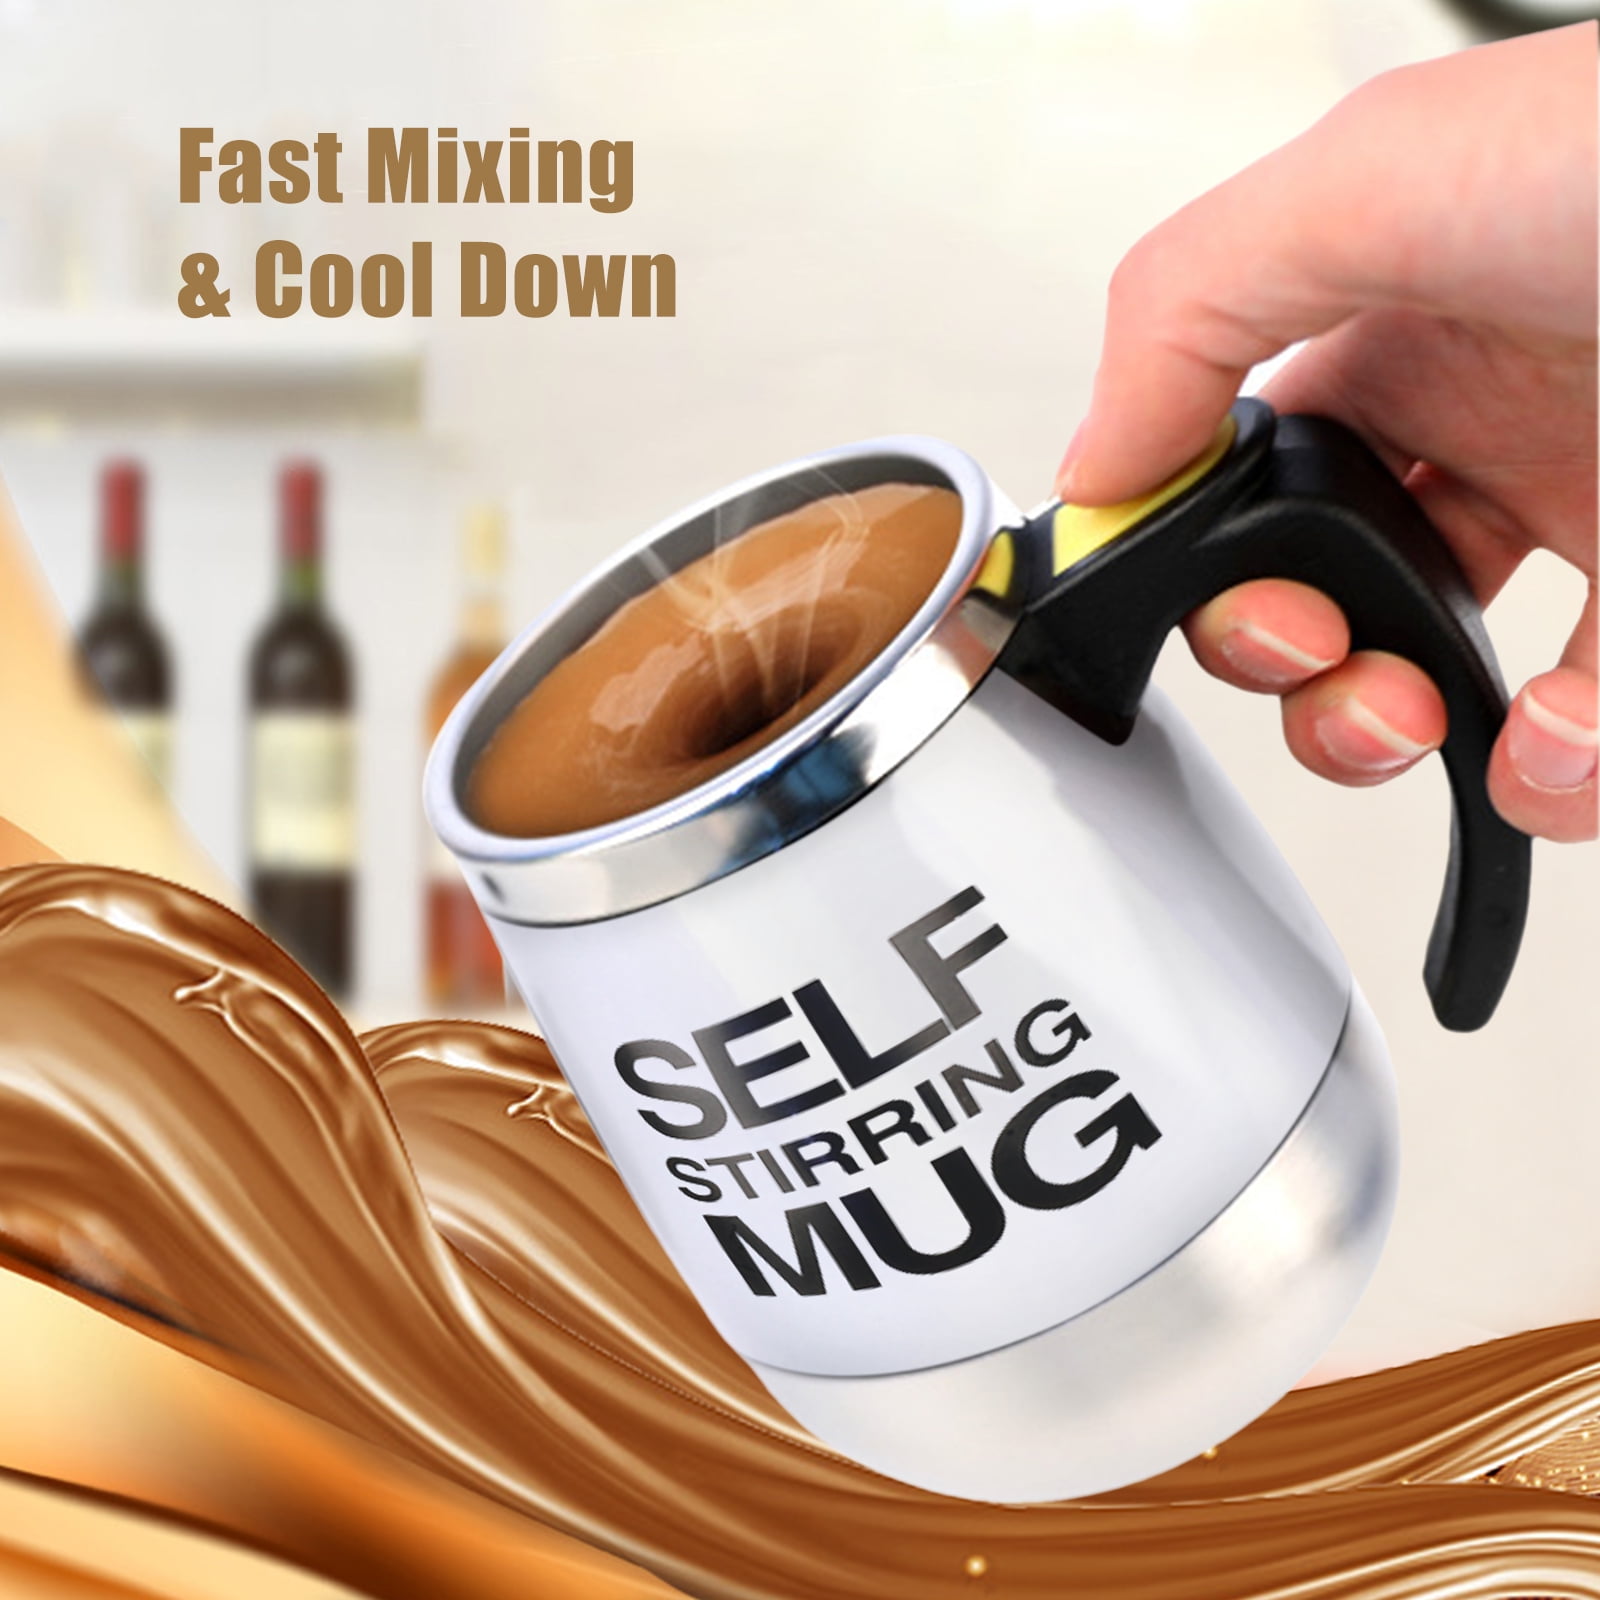  HPX Self Stirring Coffee Mug: Electric Self Mixing Mug  Rechargeable Stirring Mug Auto Magnetic Mug Portable Self Stirring Mug dor  Coffee Powder Milk Tea Cocoa : Home & Kitchen